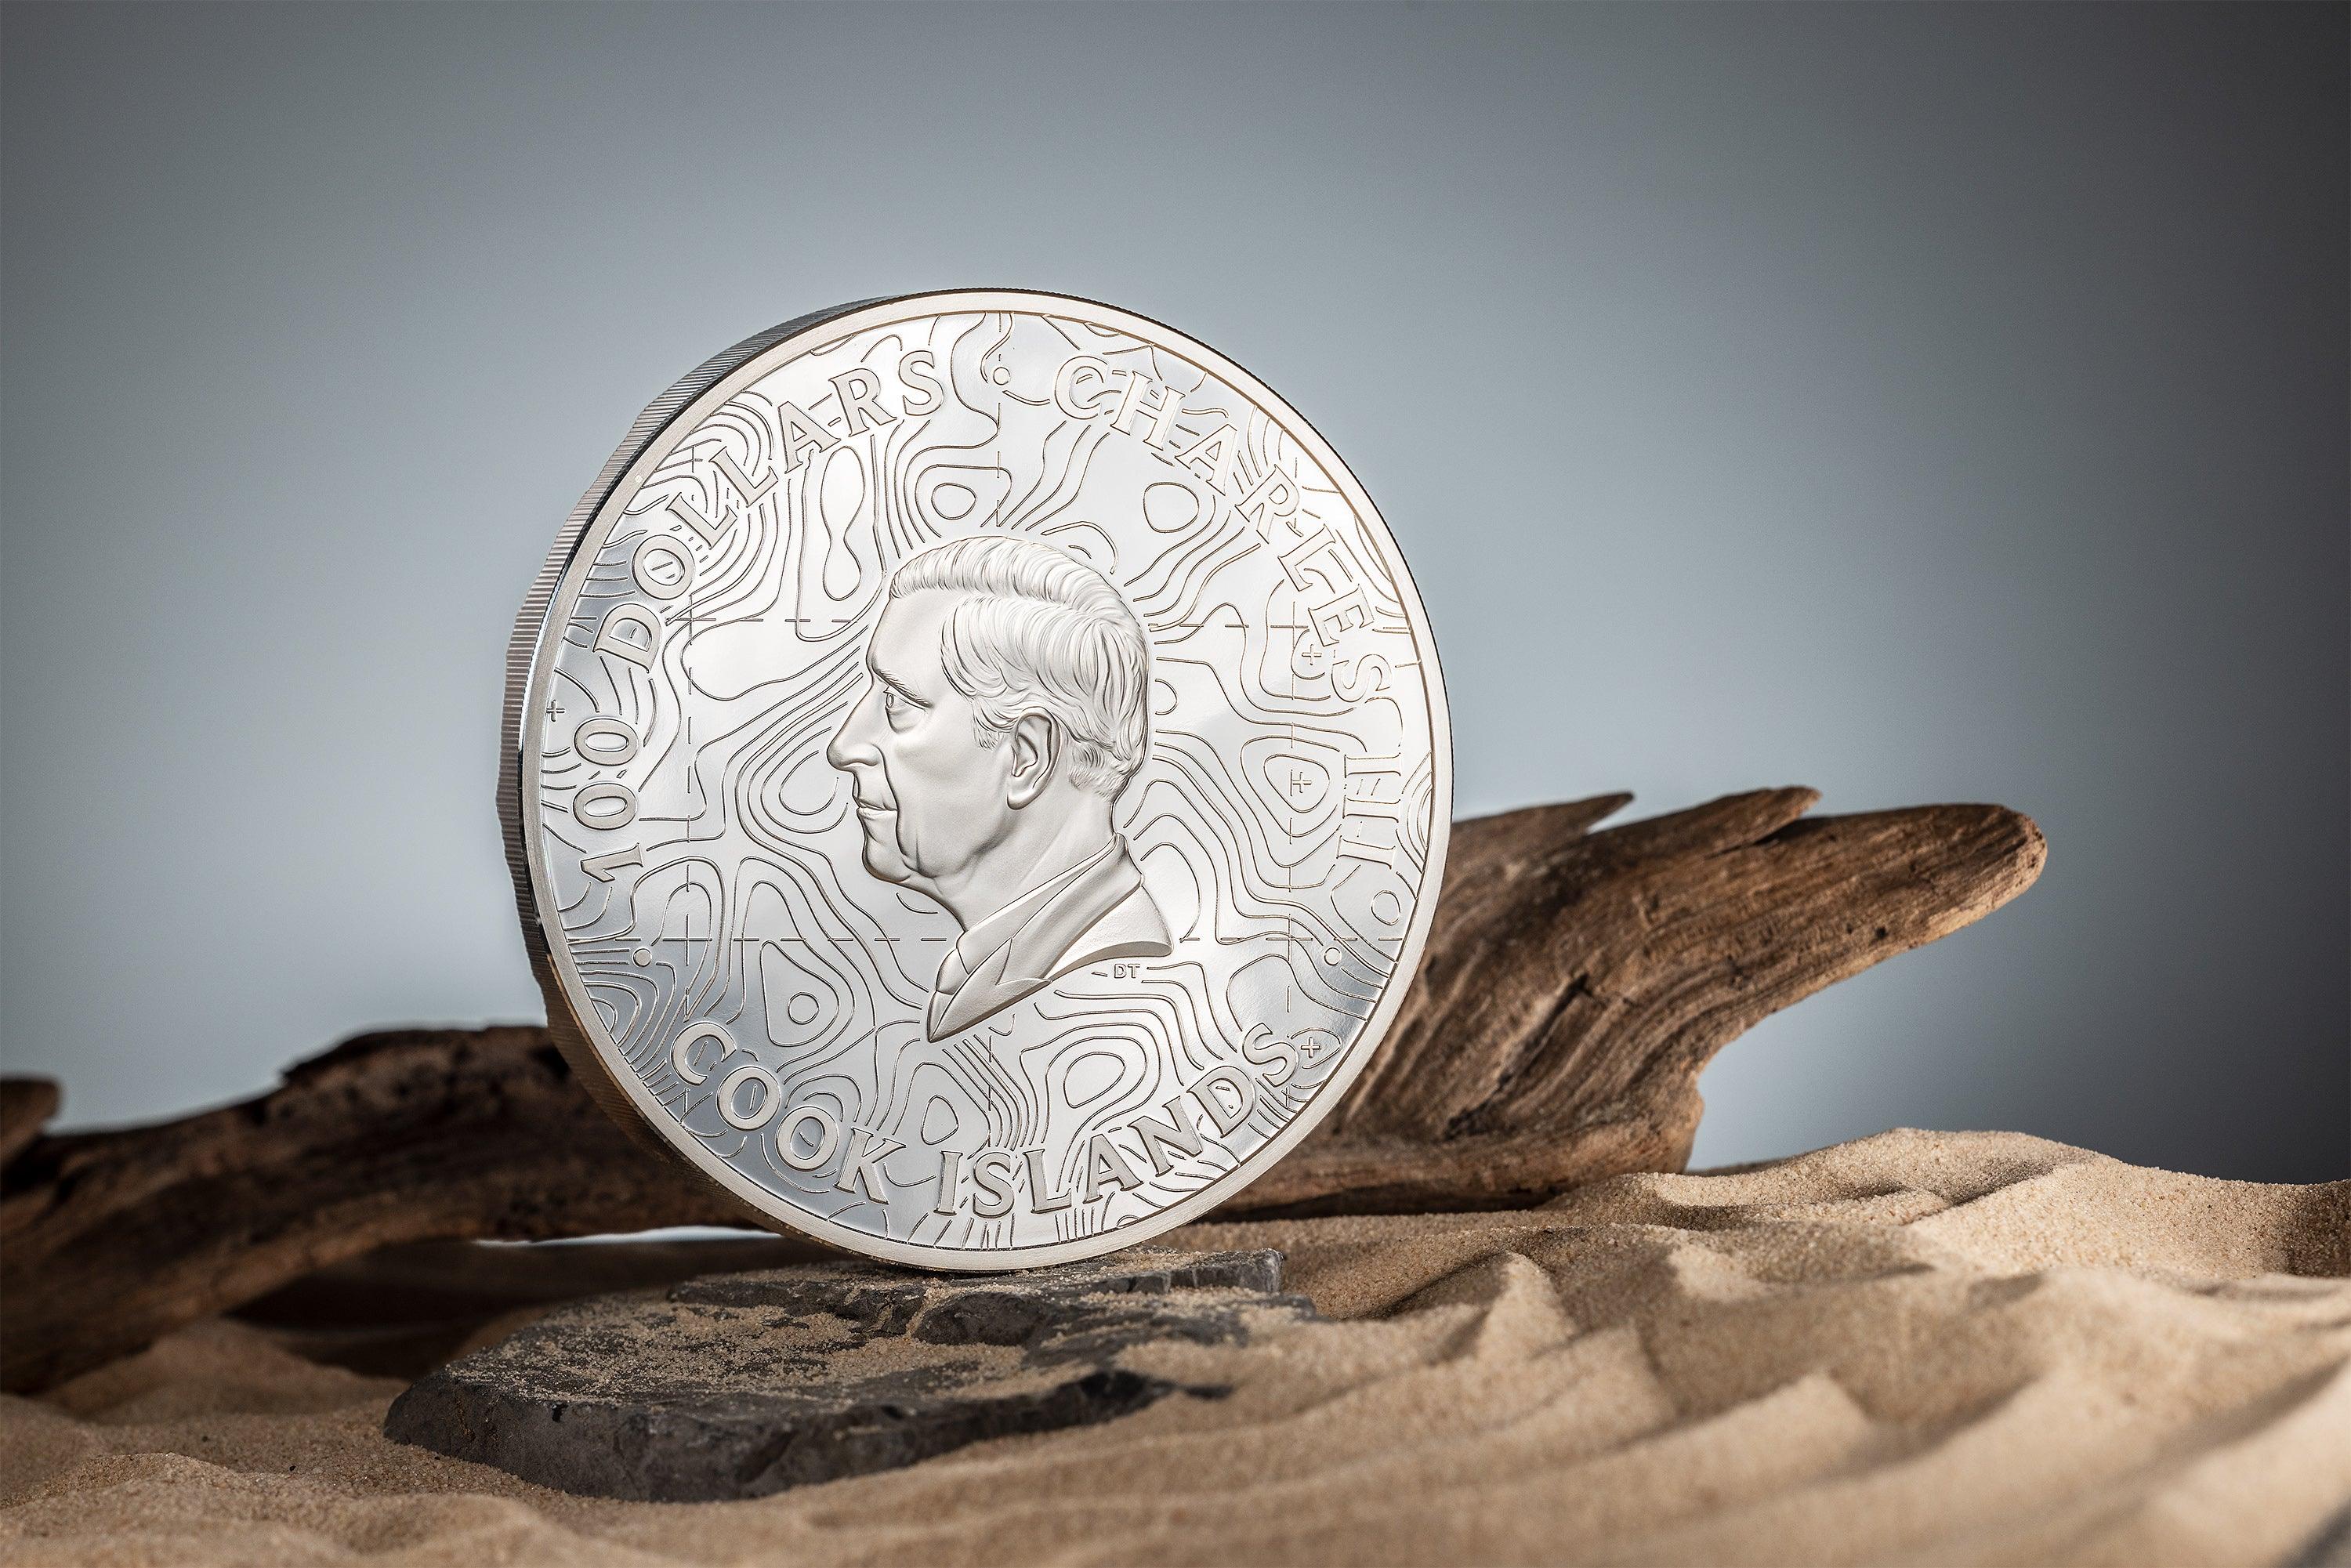 GRAND CANYON Topography 1 Kg Kilo Silver Coin $100 Cook Islands 2024 - PARTHAVA COIN